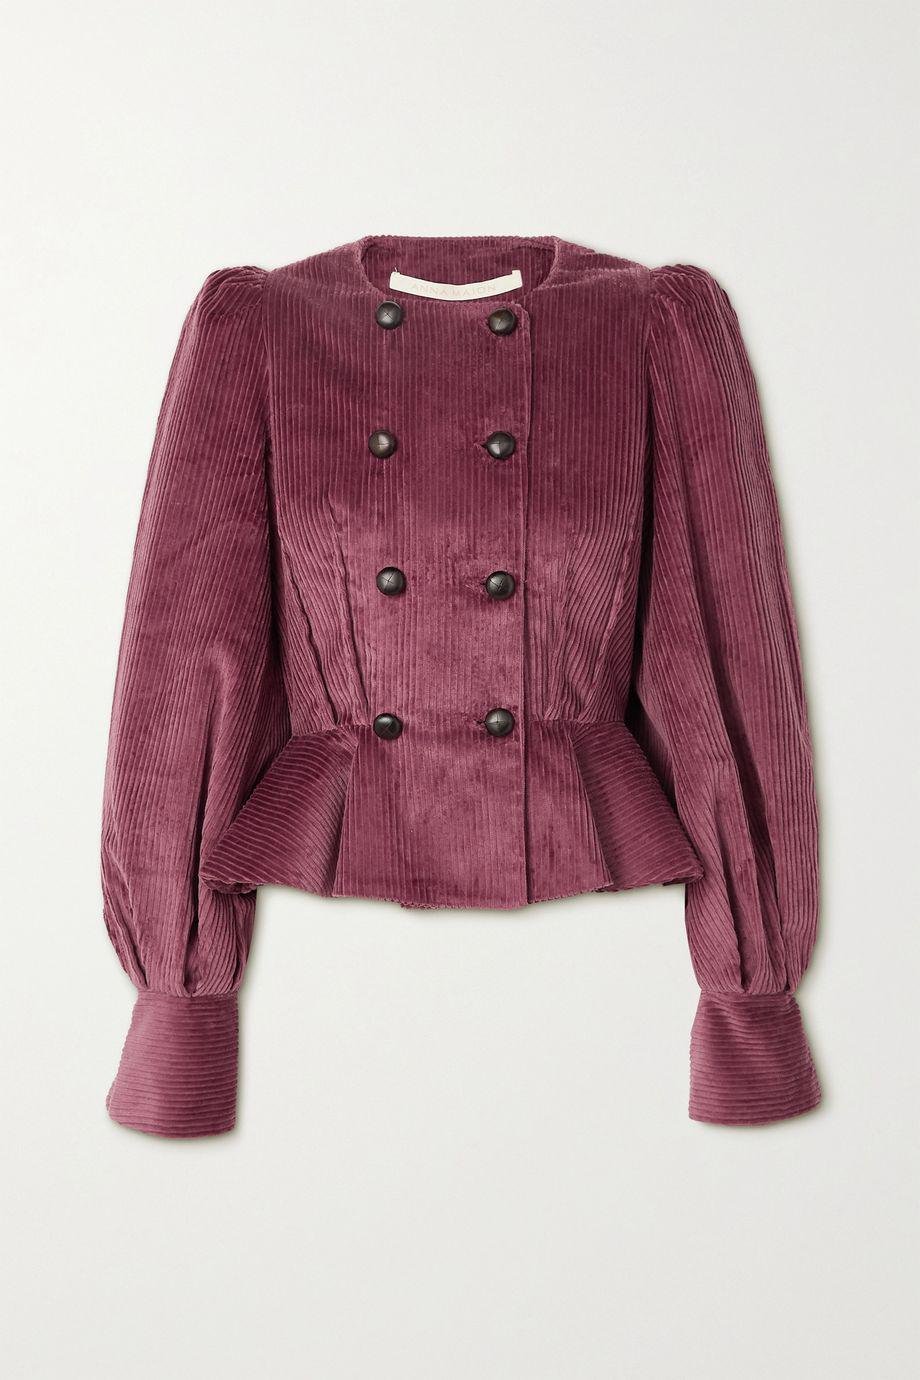 Lulu double-breasted cotton-corduroy peplum jacket by ANNA MASON